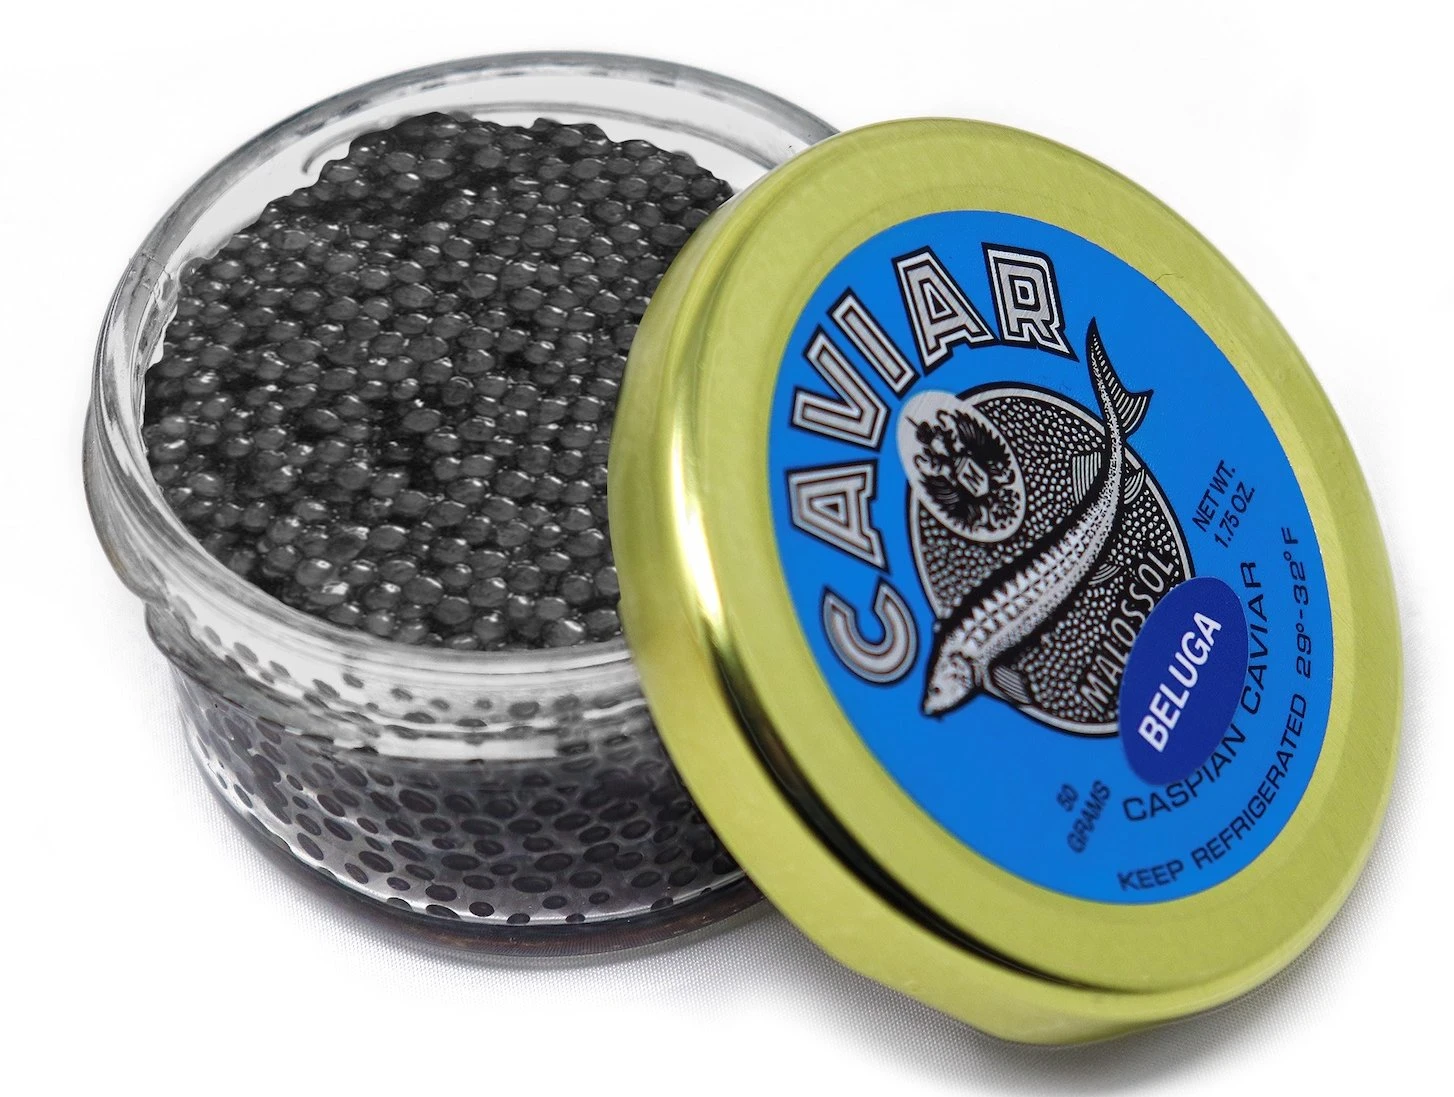 Marky’s Caviar Group Releases American Beluga